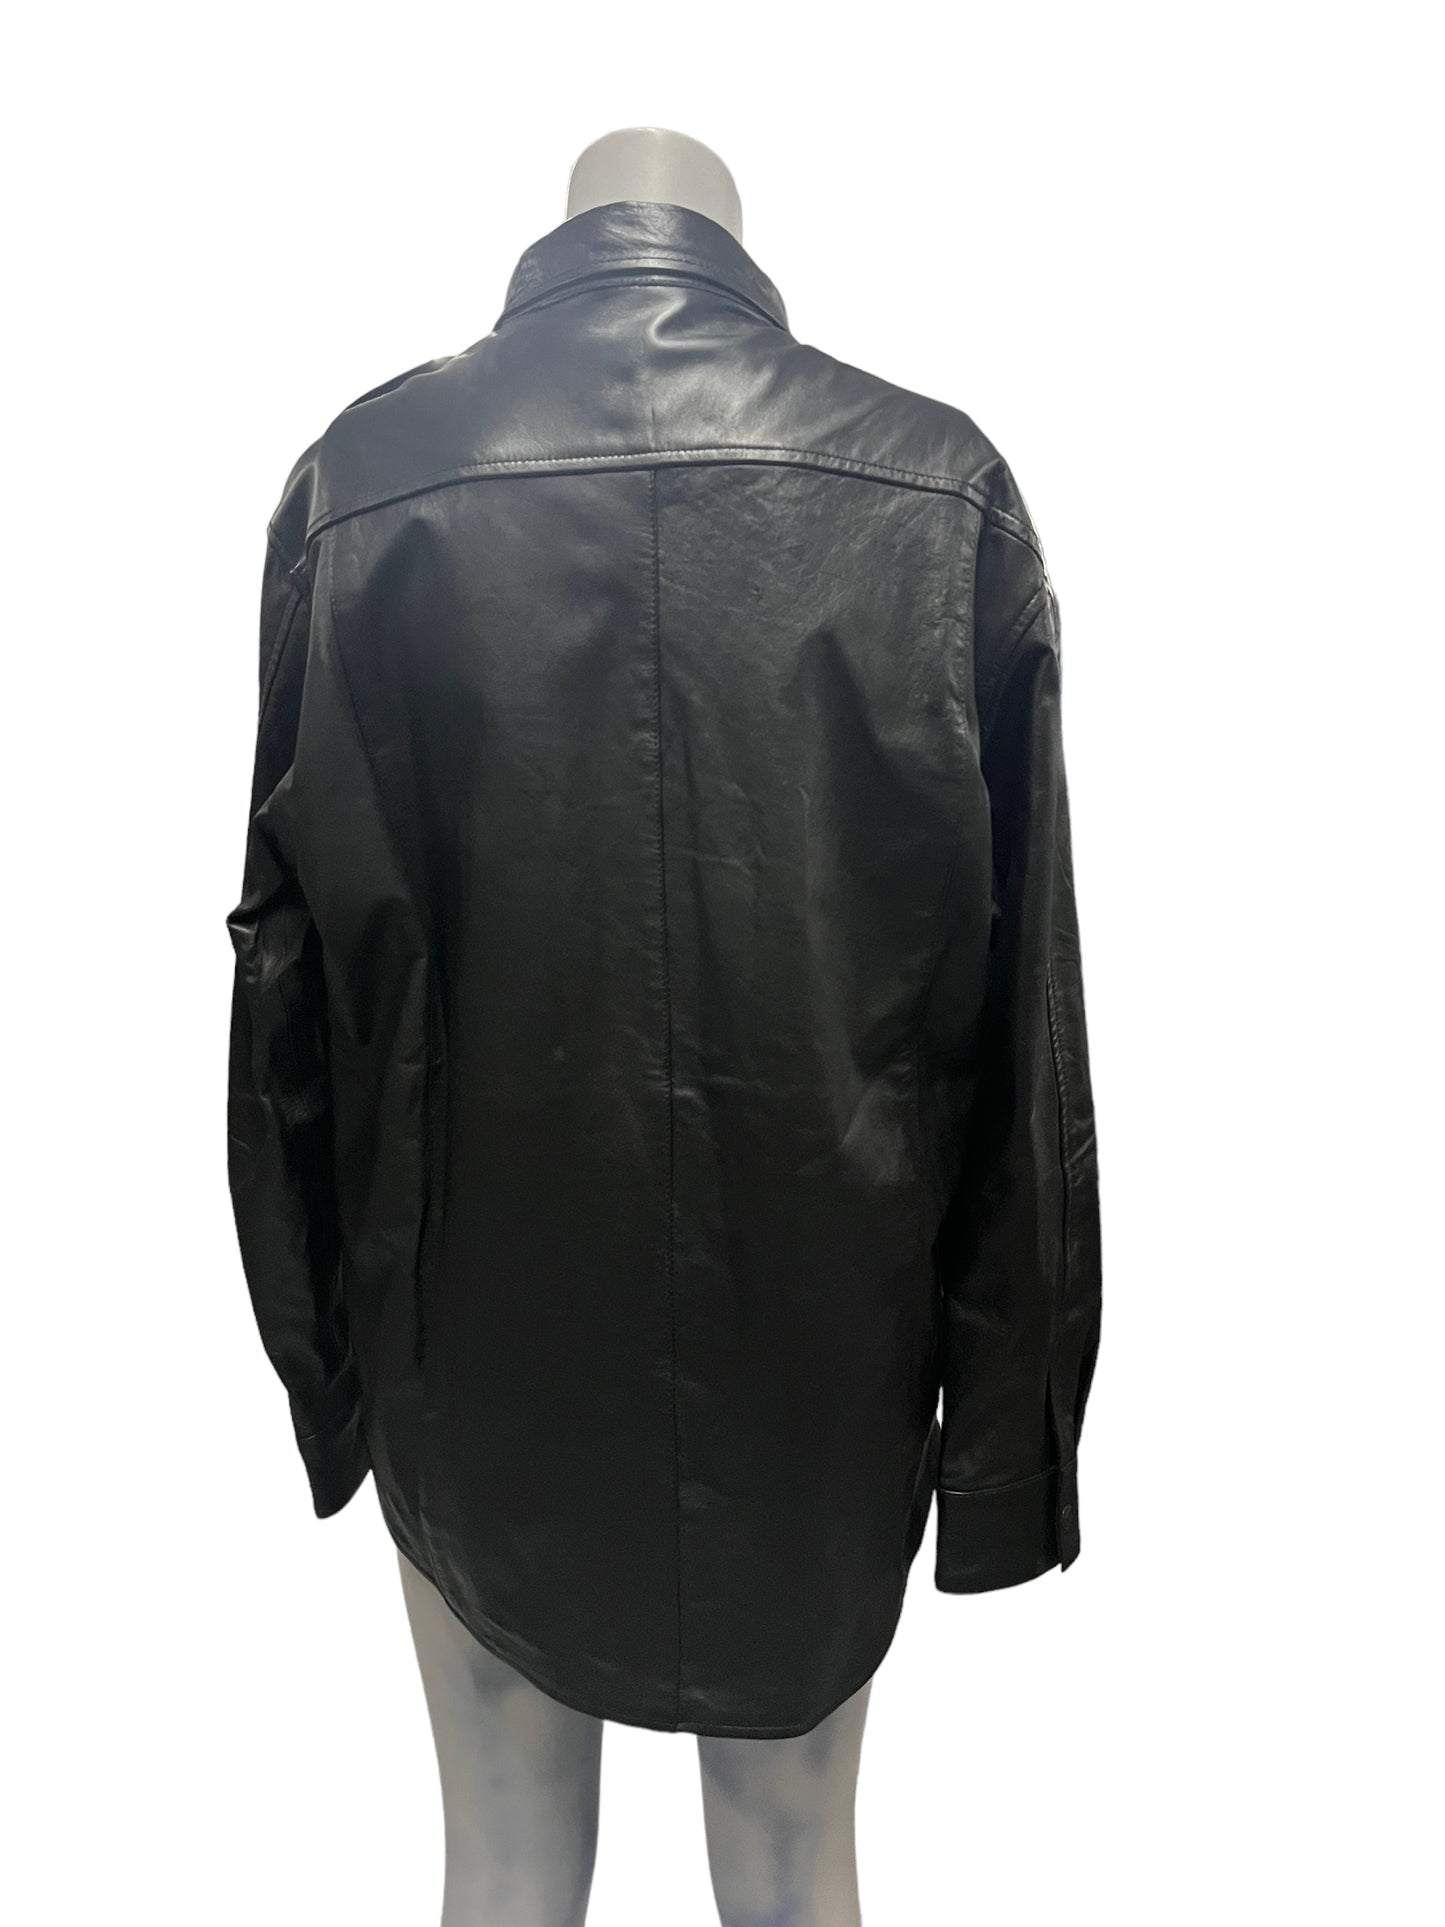 Fashion World - LL101 Black Leather Jacket - Size L